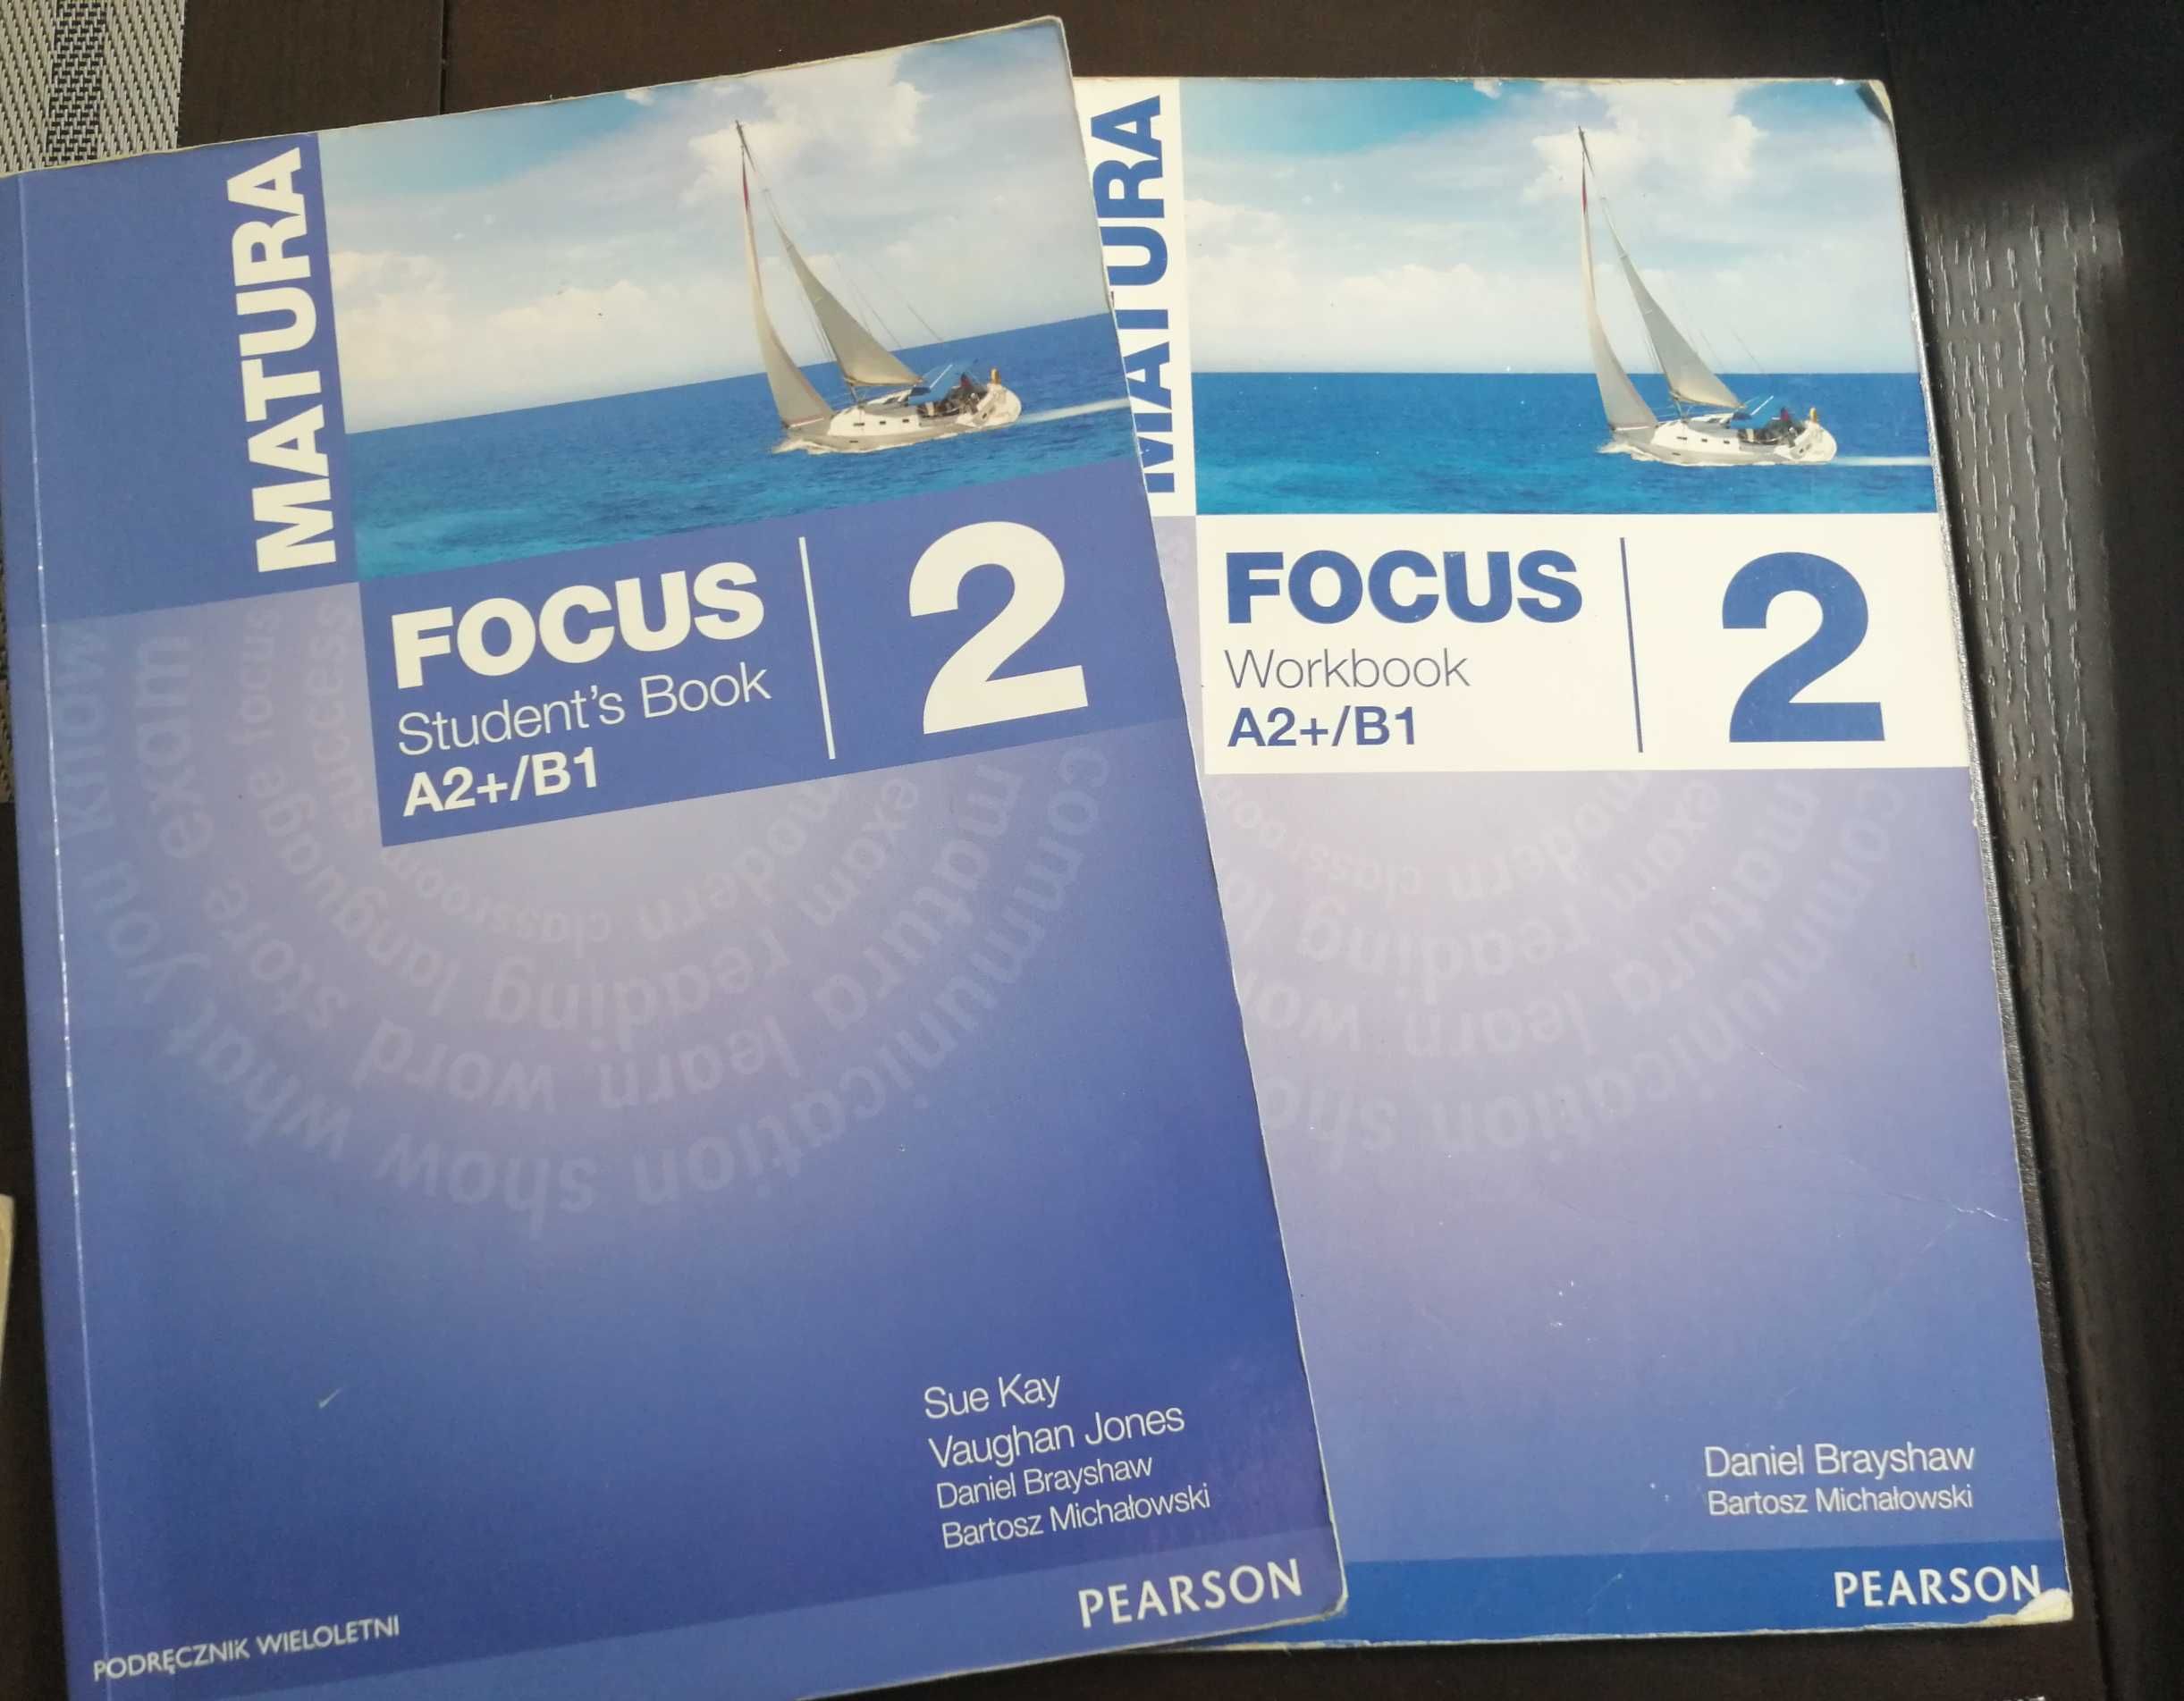 Focus Student's Book i Workbook A2+B1  2